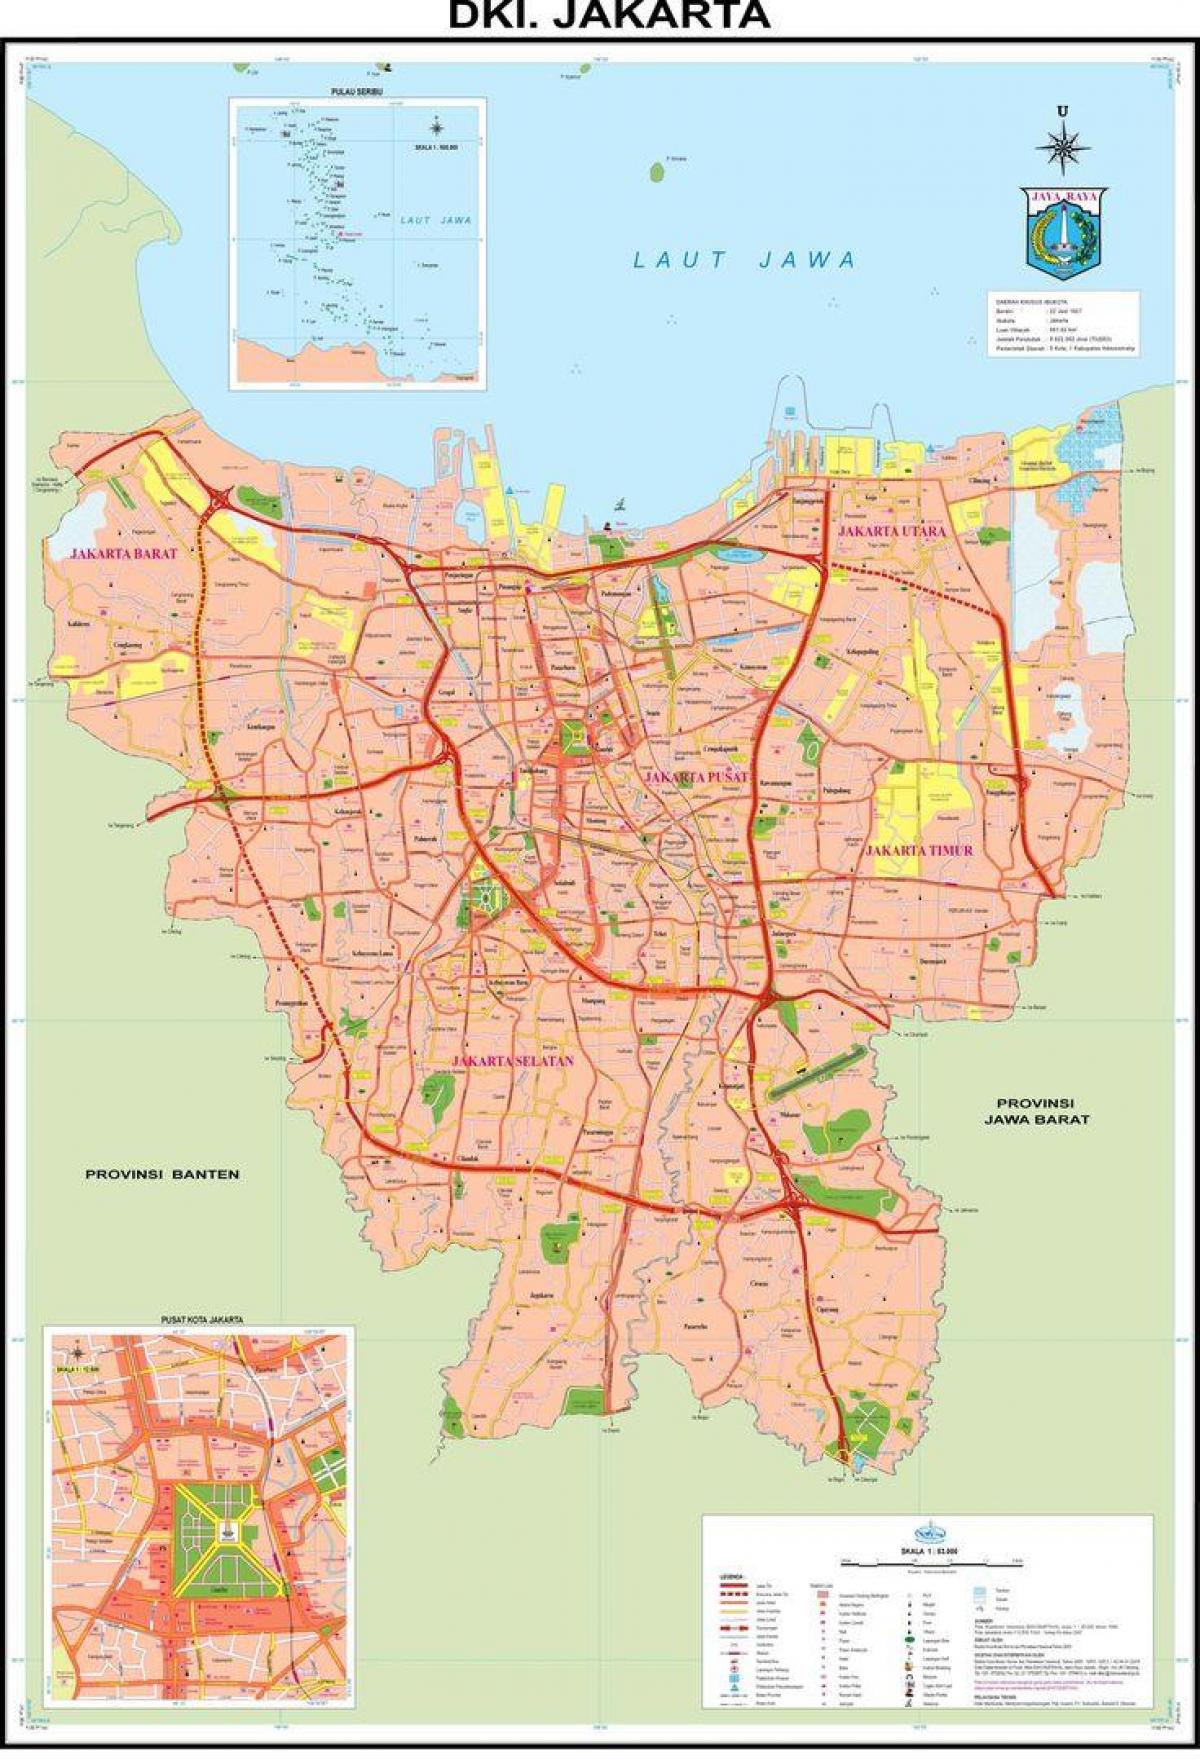 Kota tua Jakarta map - Peta Jakarta old town (Jawa - Indonesia)